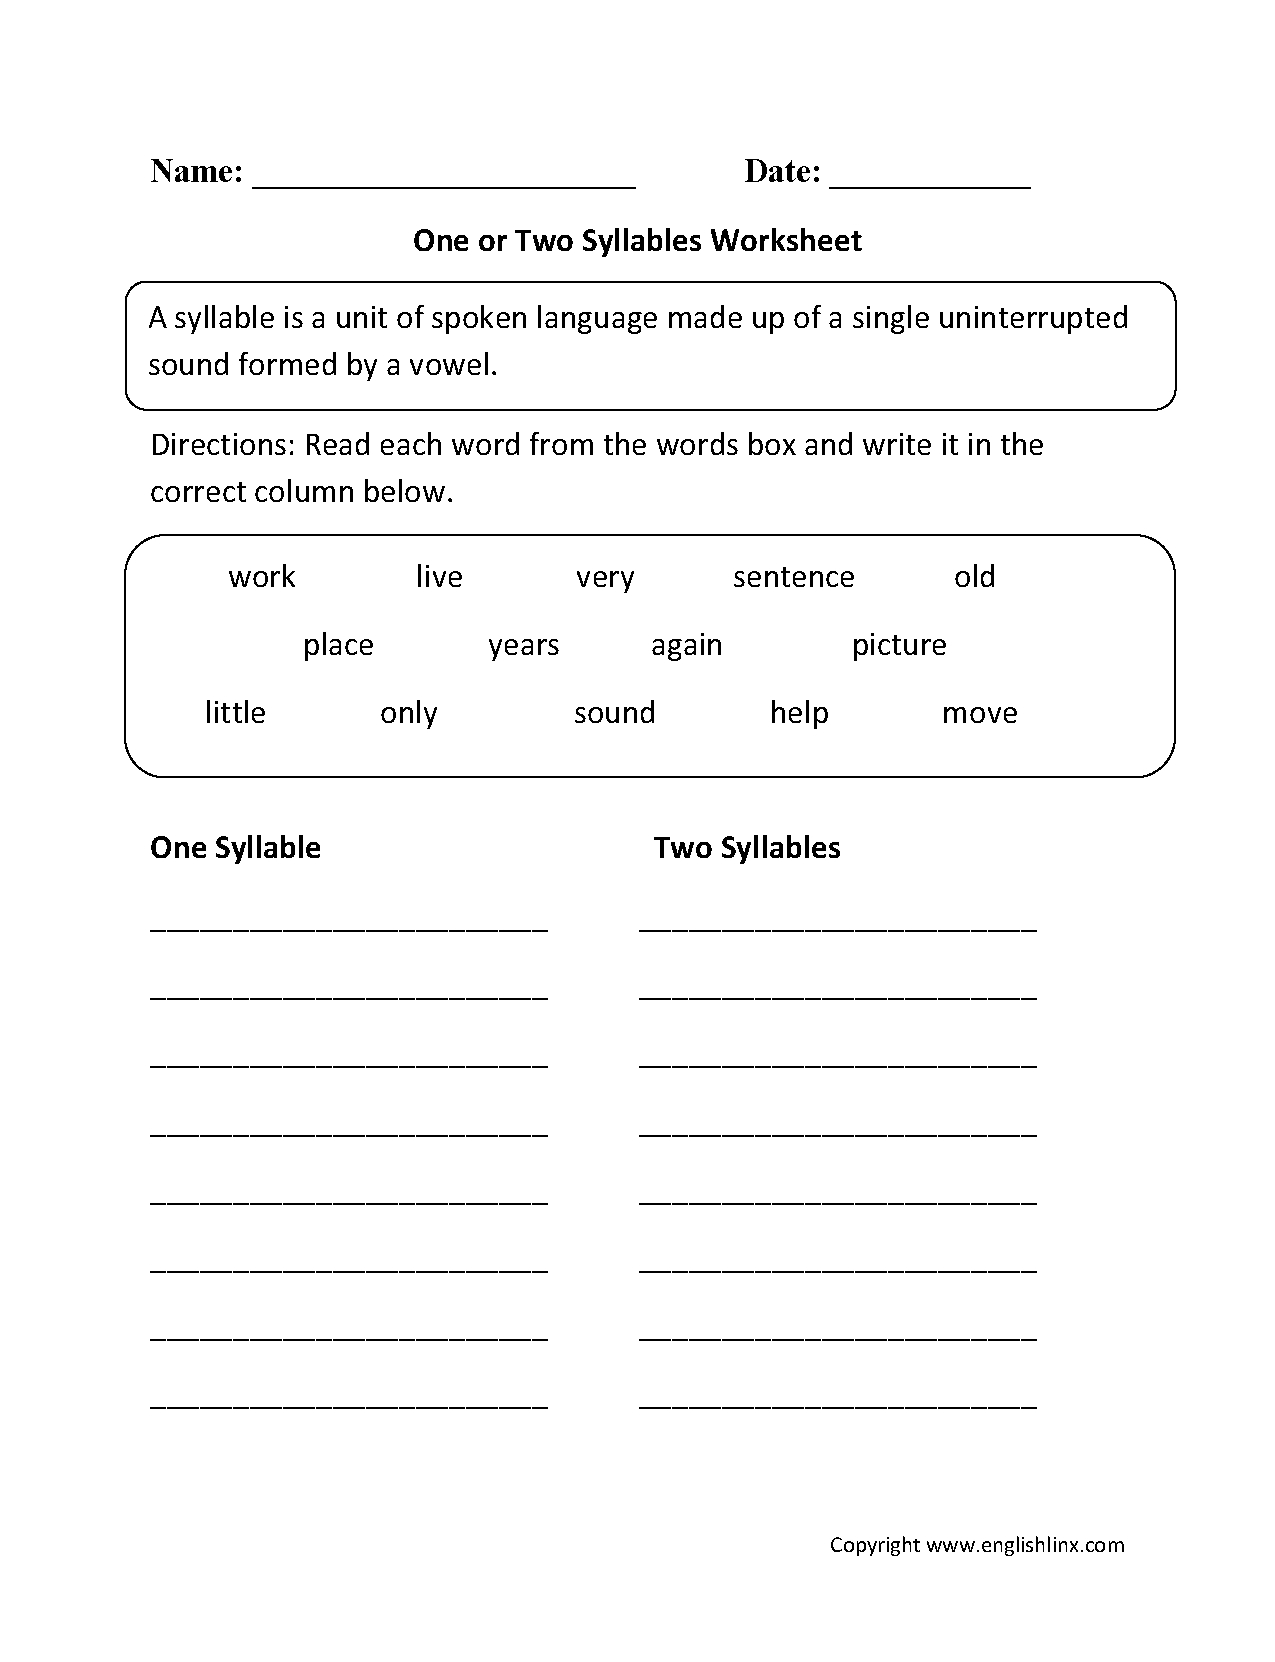 syllable-sort-worksheet